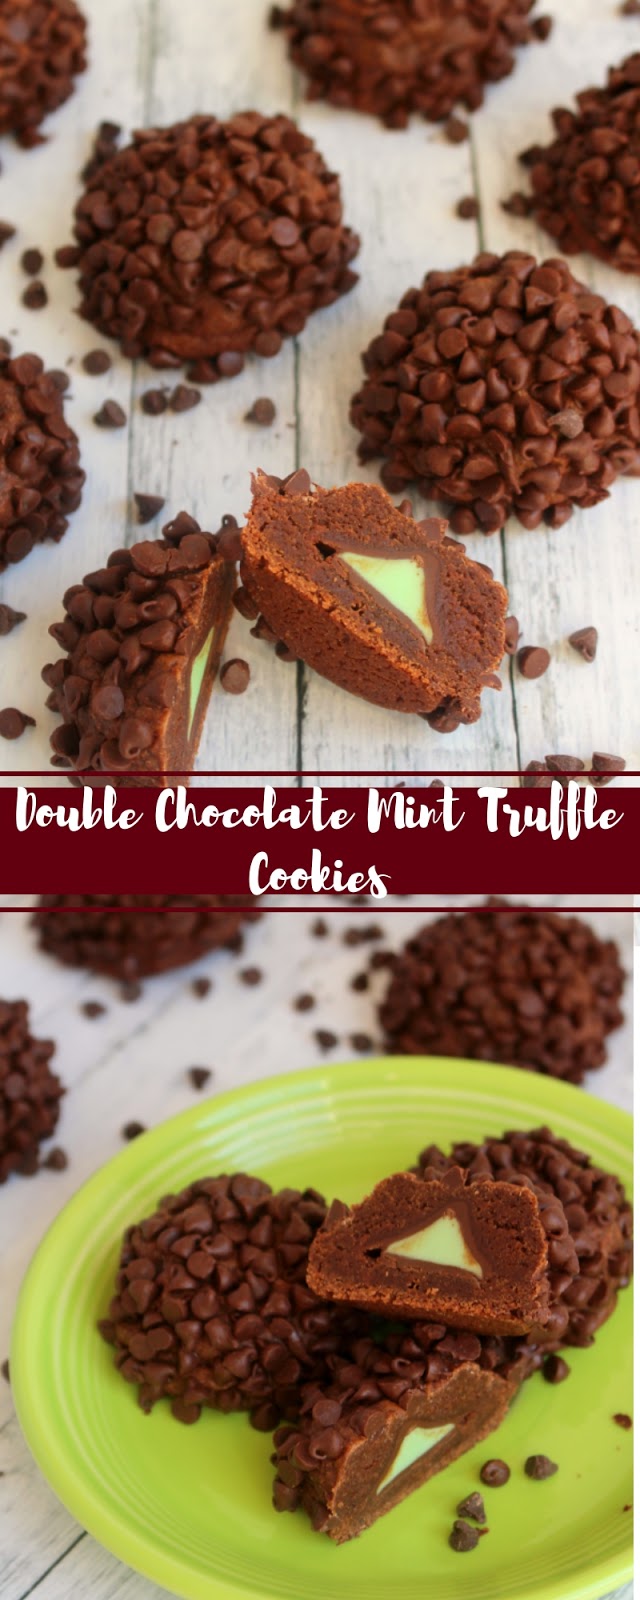 Double Chocolate Mint Truffle Cookies